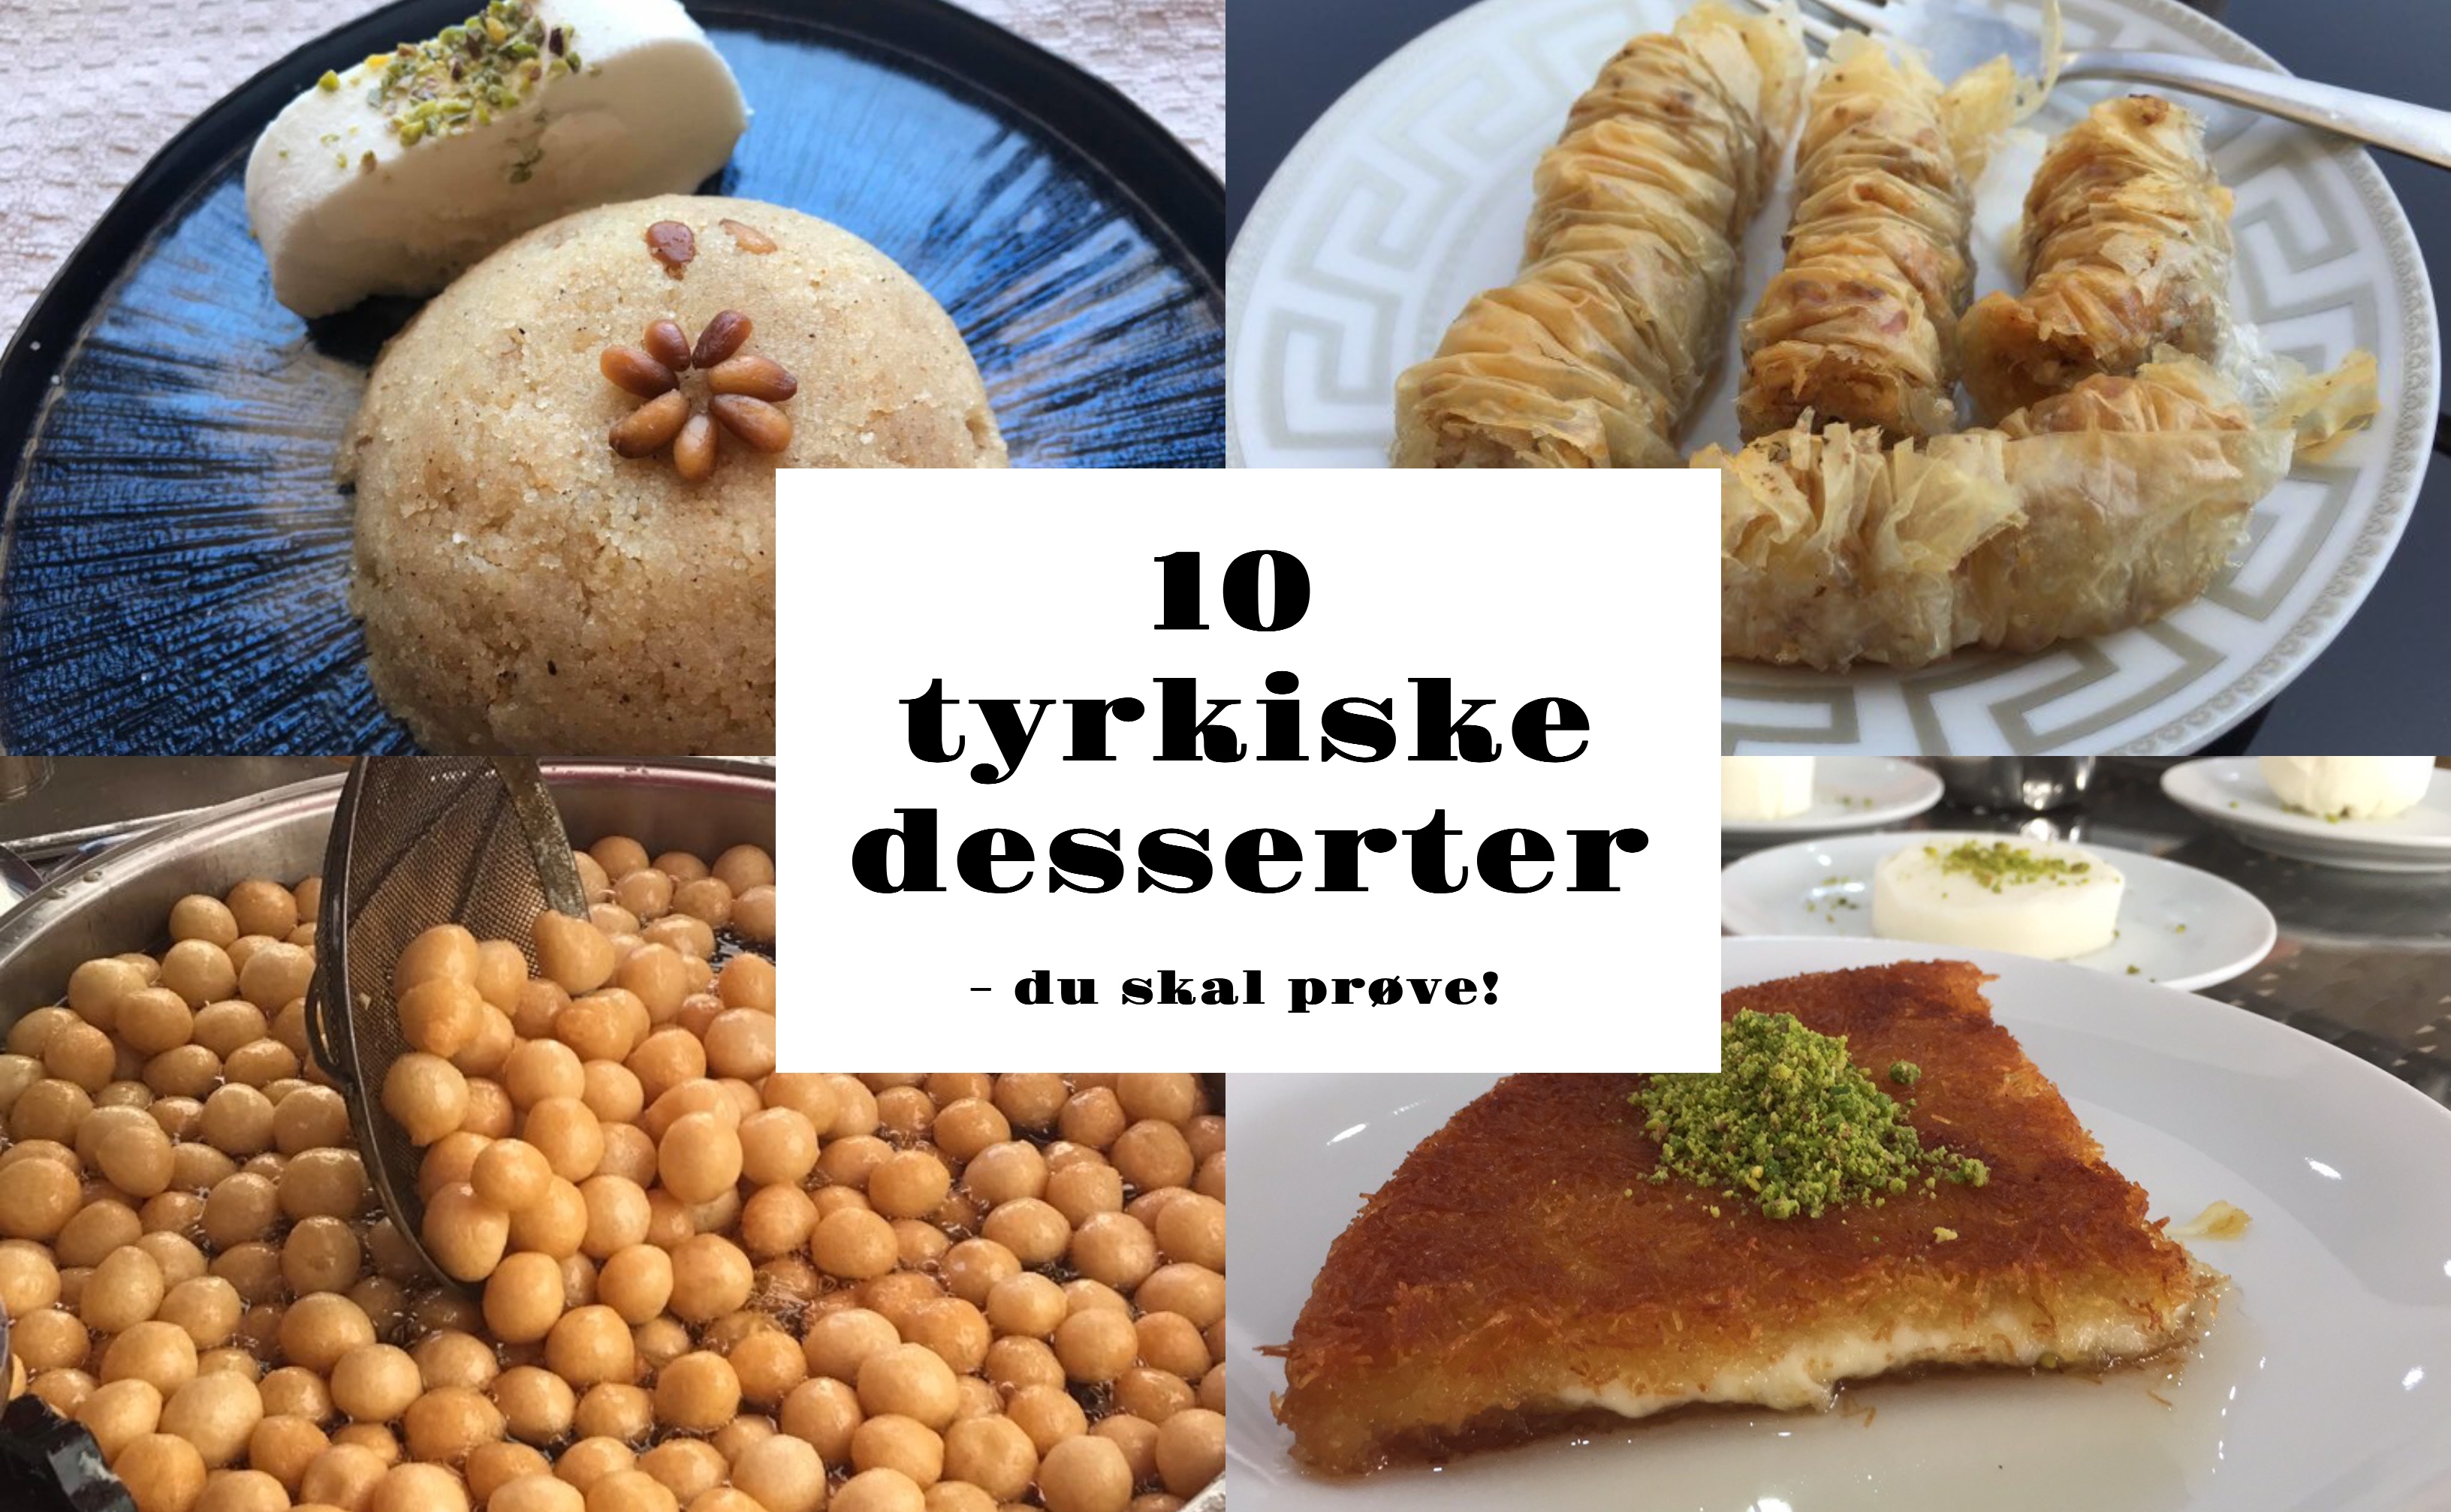 tyrkiske desserter, tyrkisk kage, tyrkiske desserter, desserter i tyrkiet, tyrkisk ostekage, tyrkisk baklava, tyrkisk is, tyrkisk sandkage, tyrkiske opskrifter, tyrkiske madopskrifter, det tyrkiske køkken, dansk i tyrkiet, tyrkiet blogger